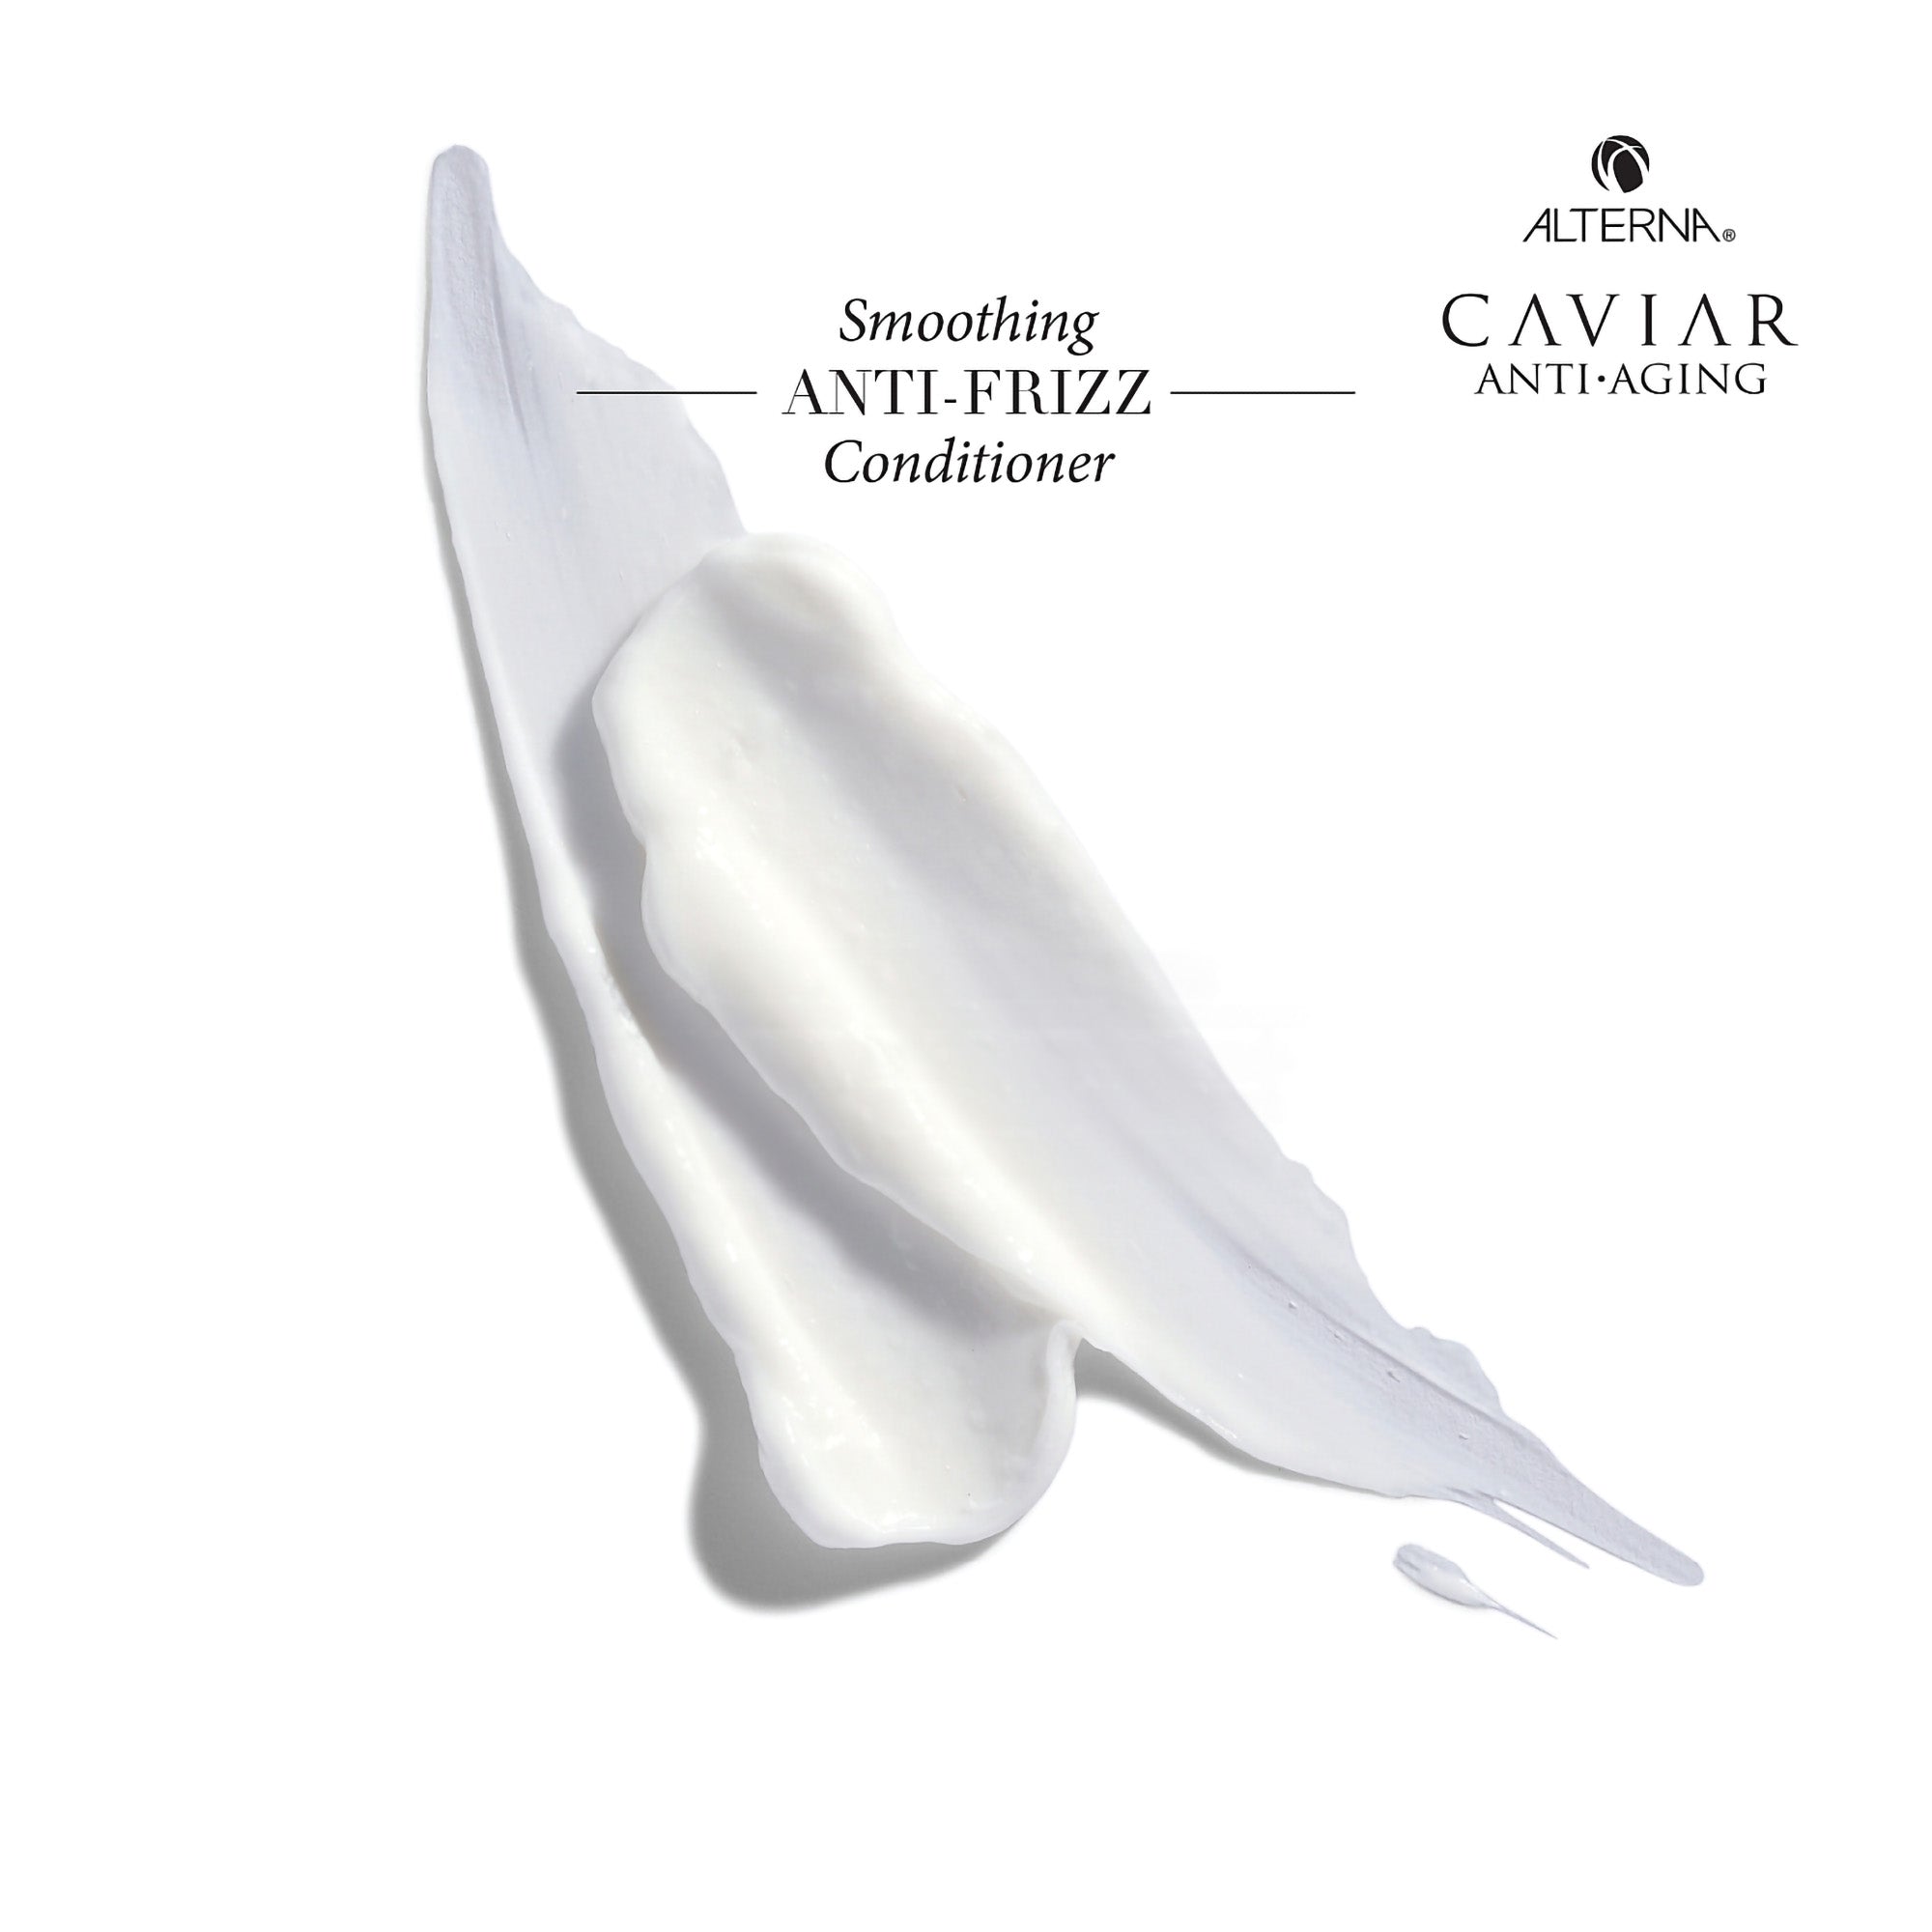 Alterna Caviar Anti-Aging Smoothing Anti-Frizz Conditioner - 33oz / 33.8